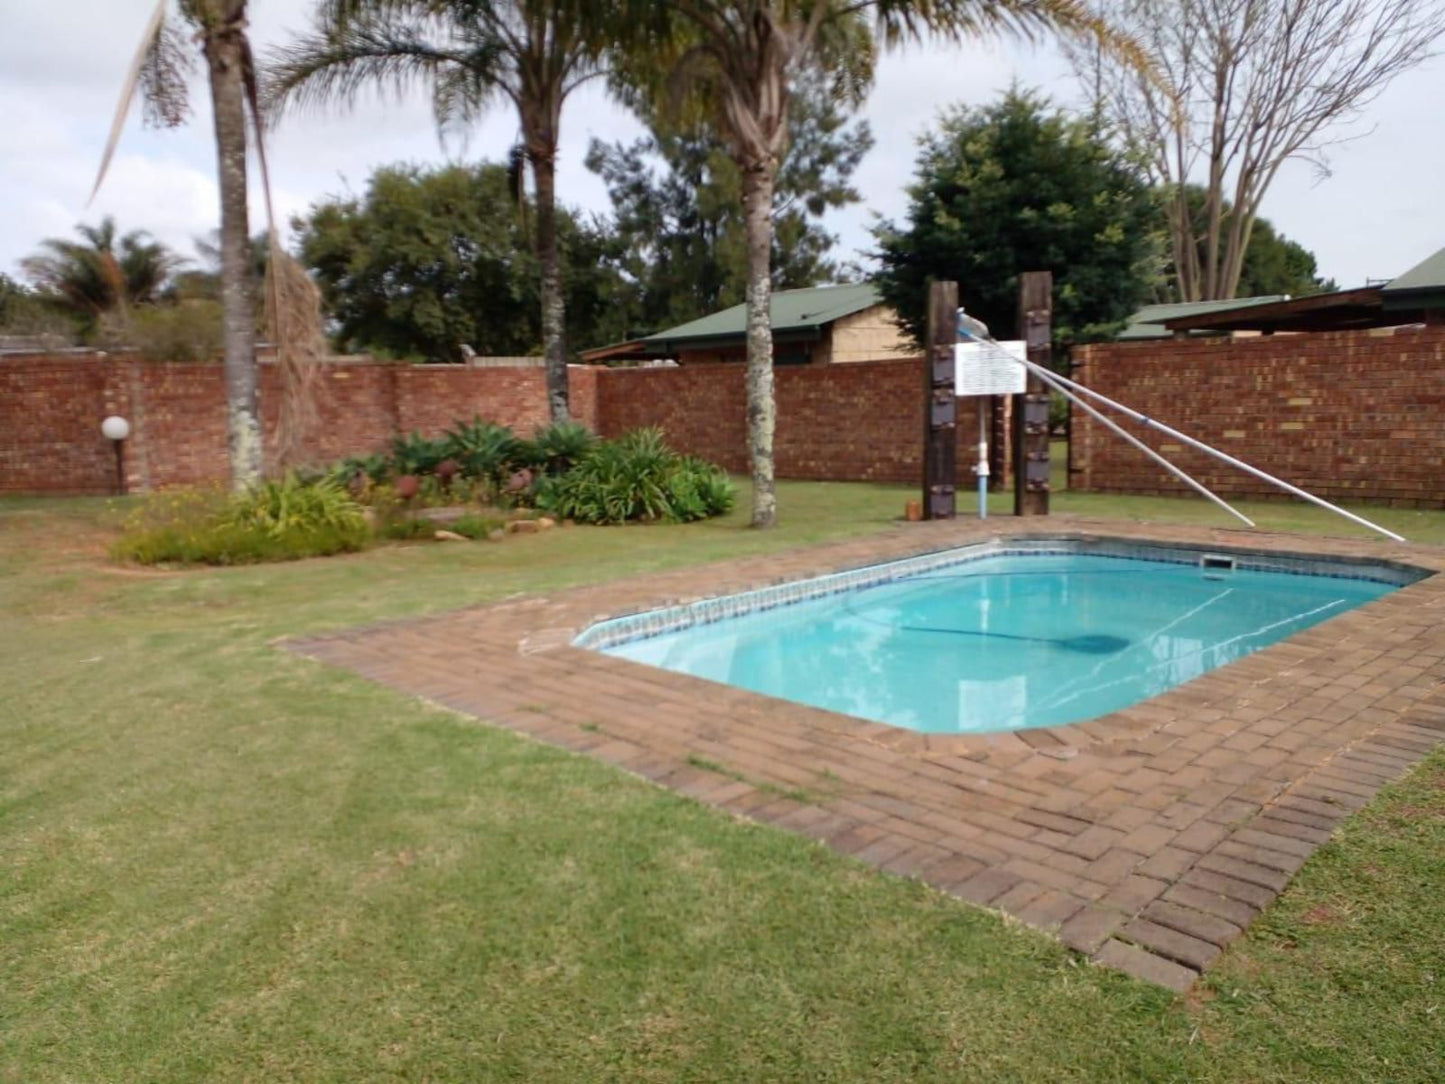 Sundowner Lodge And Caravan Park Piet Retief Mpumalanga South Africa Garden, Nature, Plant, Swimming Pool